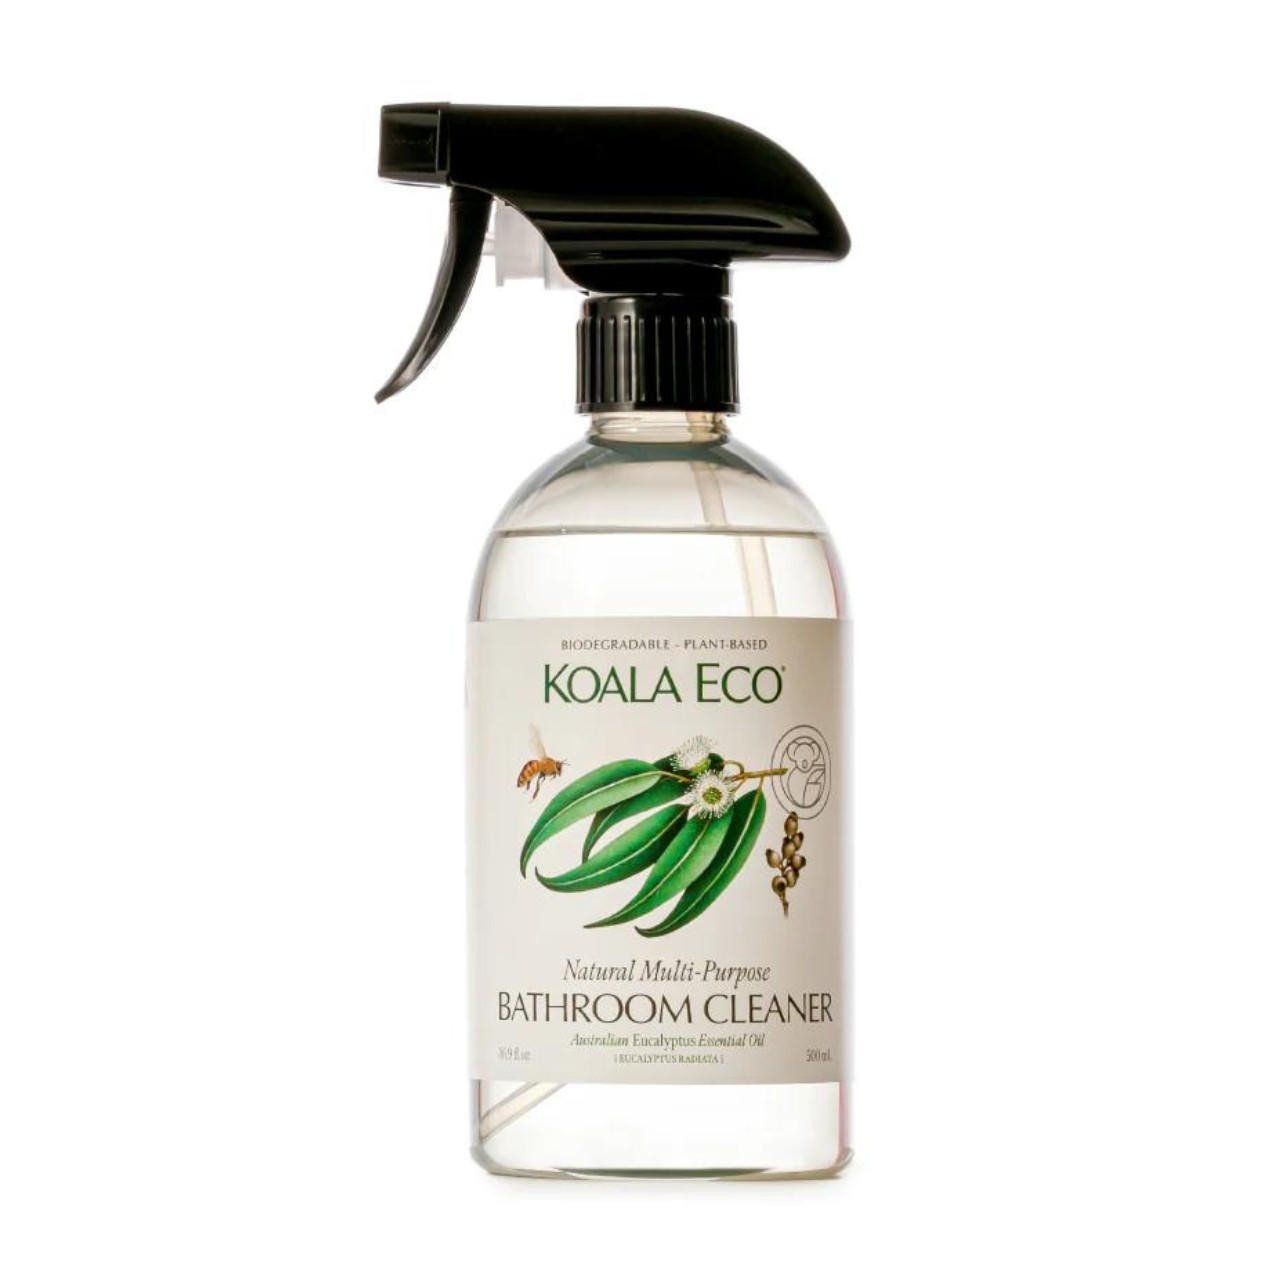  Koala Eco Natural Multi-Purpose Bathroom Cleaner 500ml 